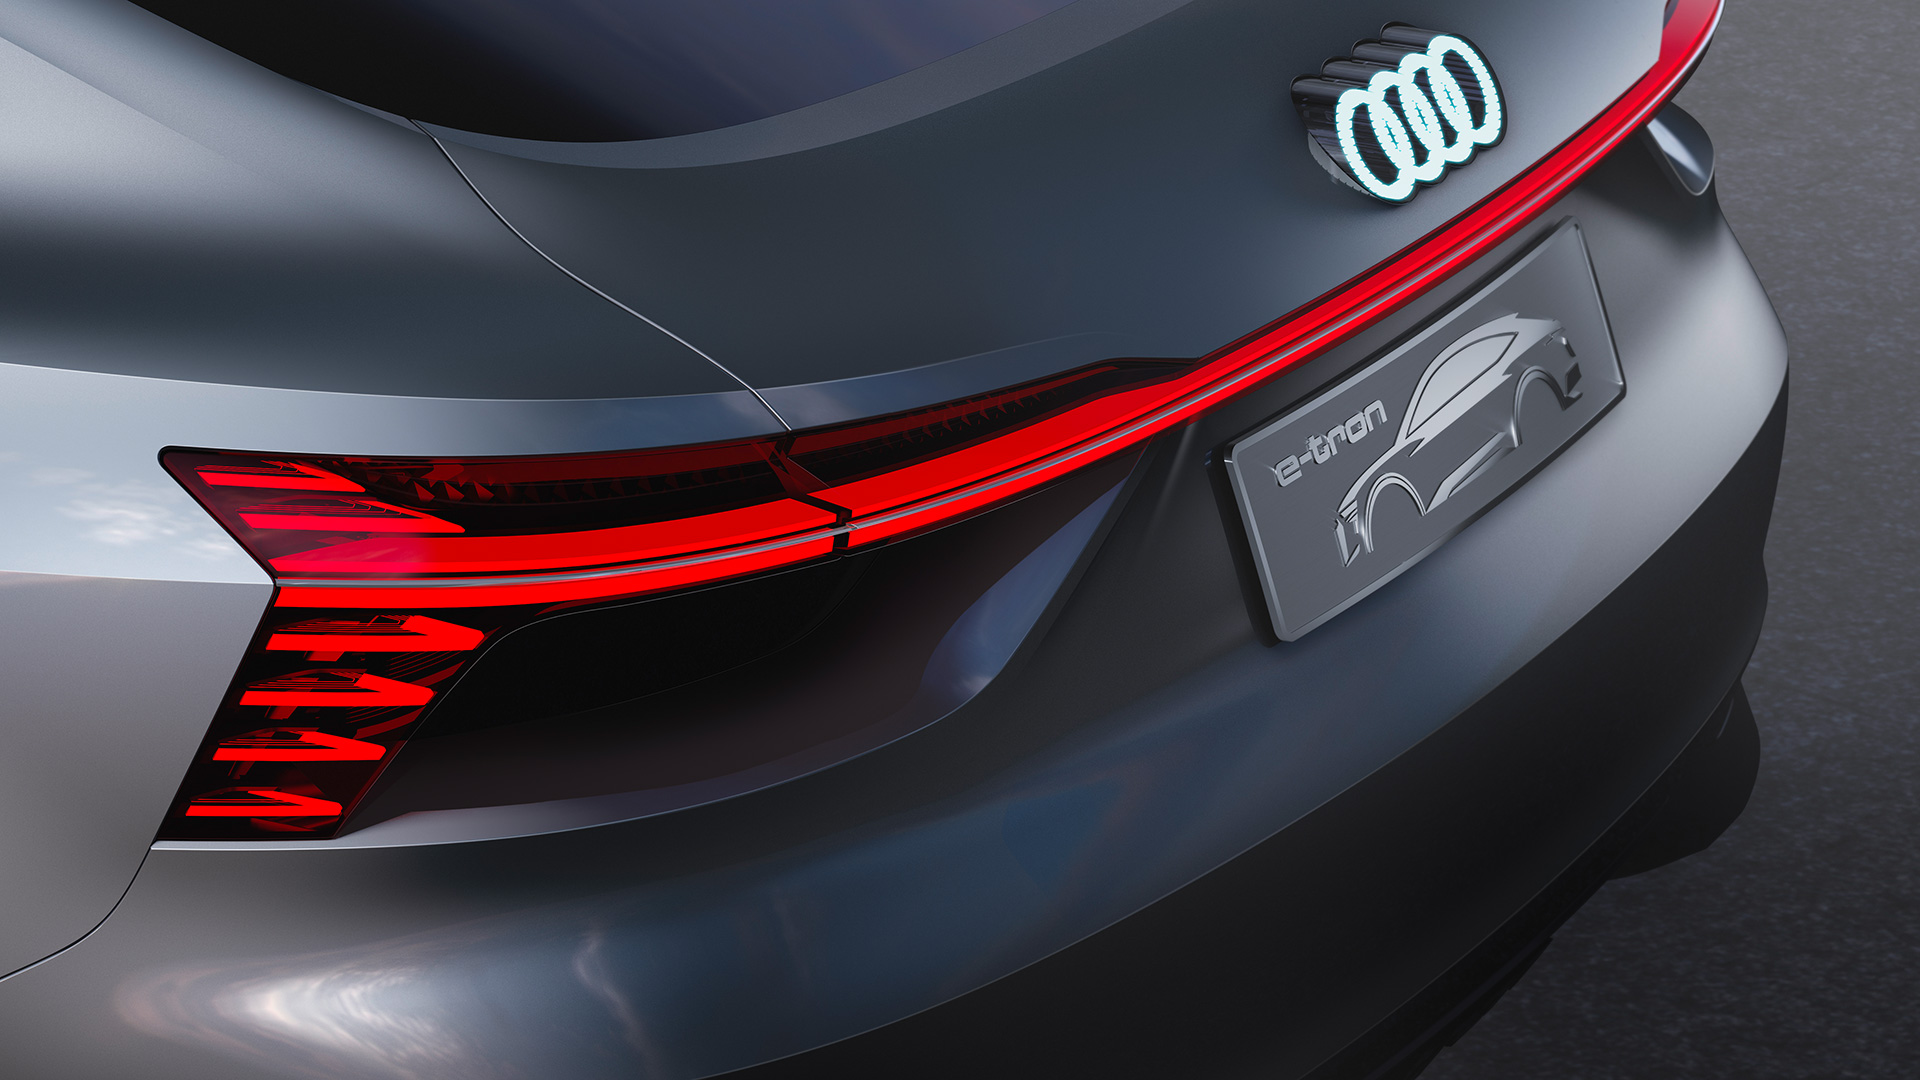 2020 Audi E-Tron Sportback red arc of light back side car view 4k photo